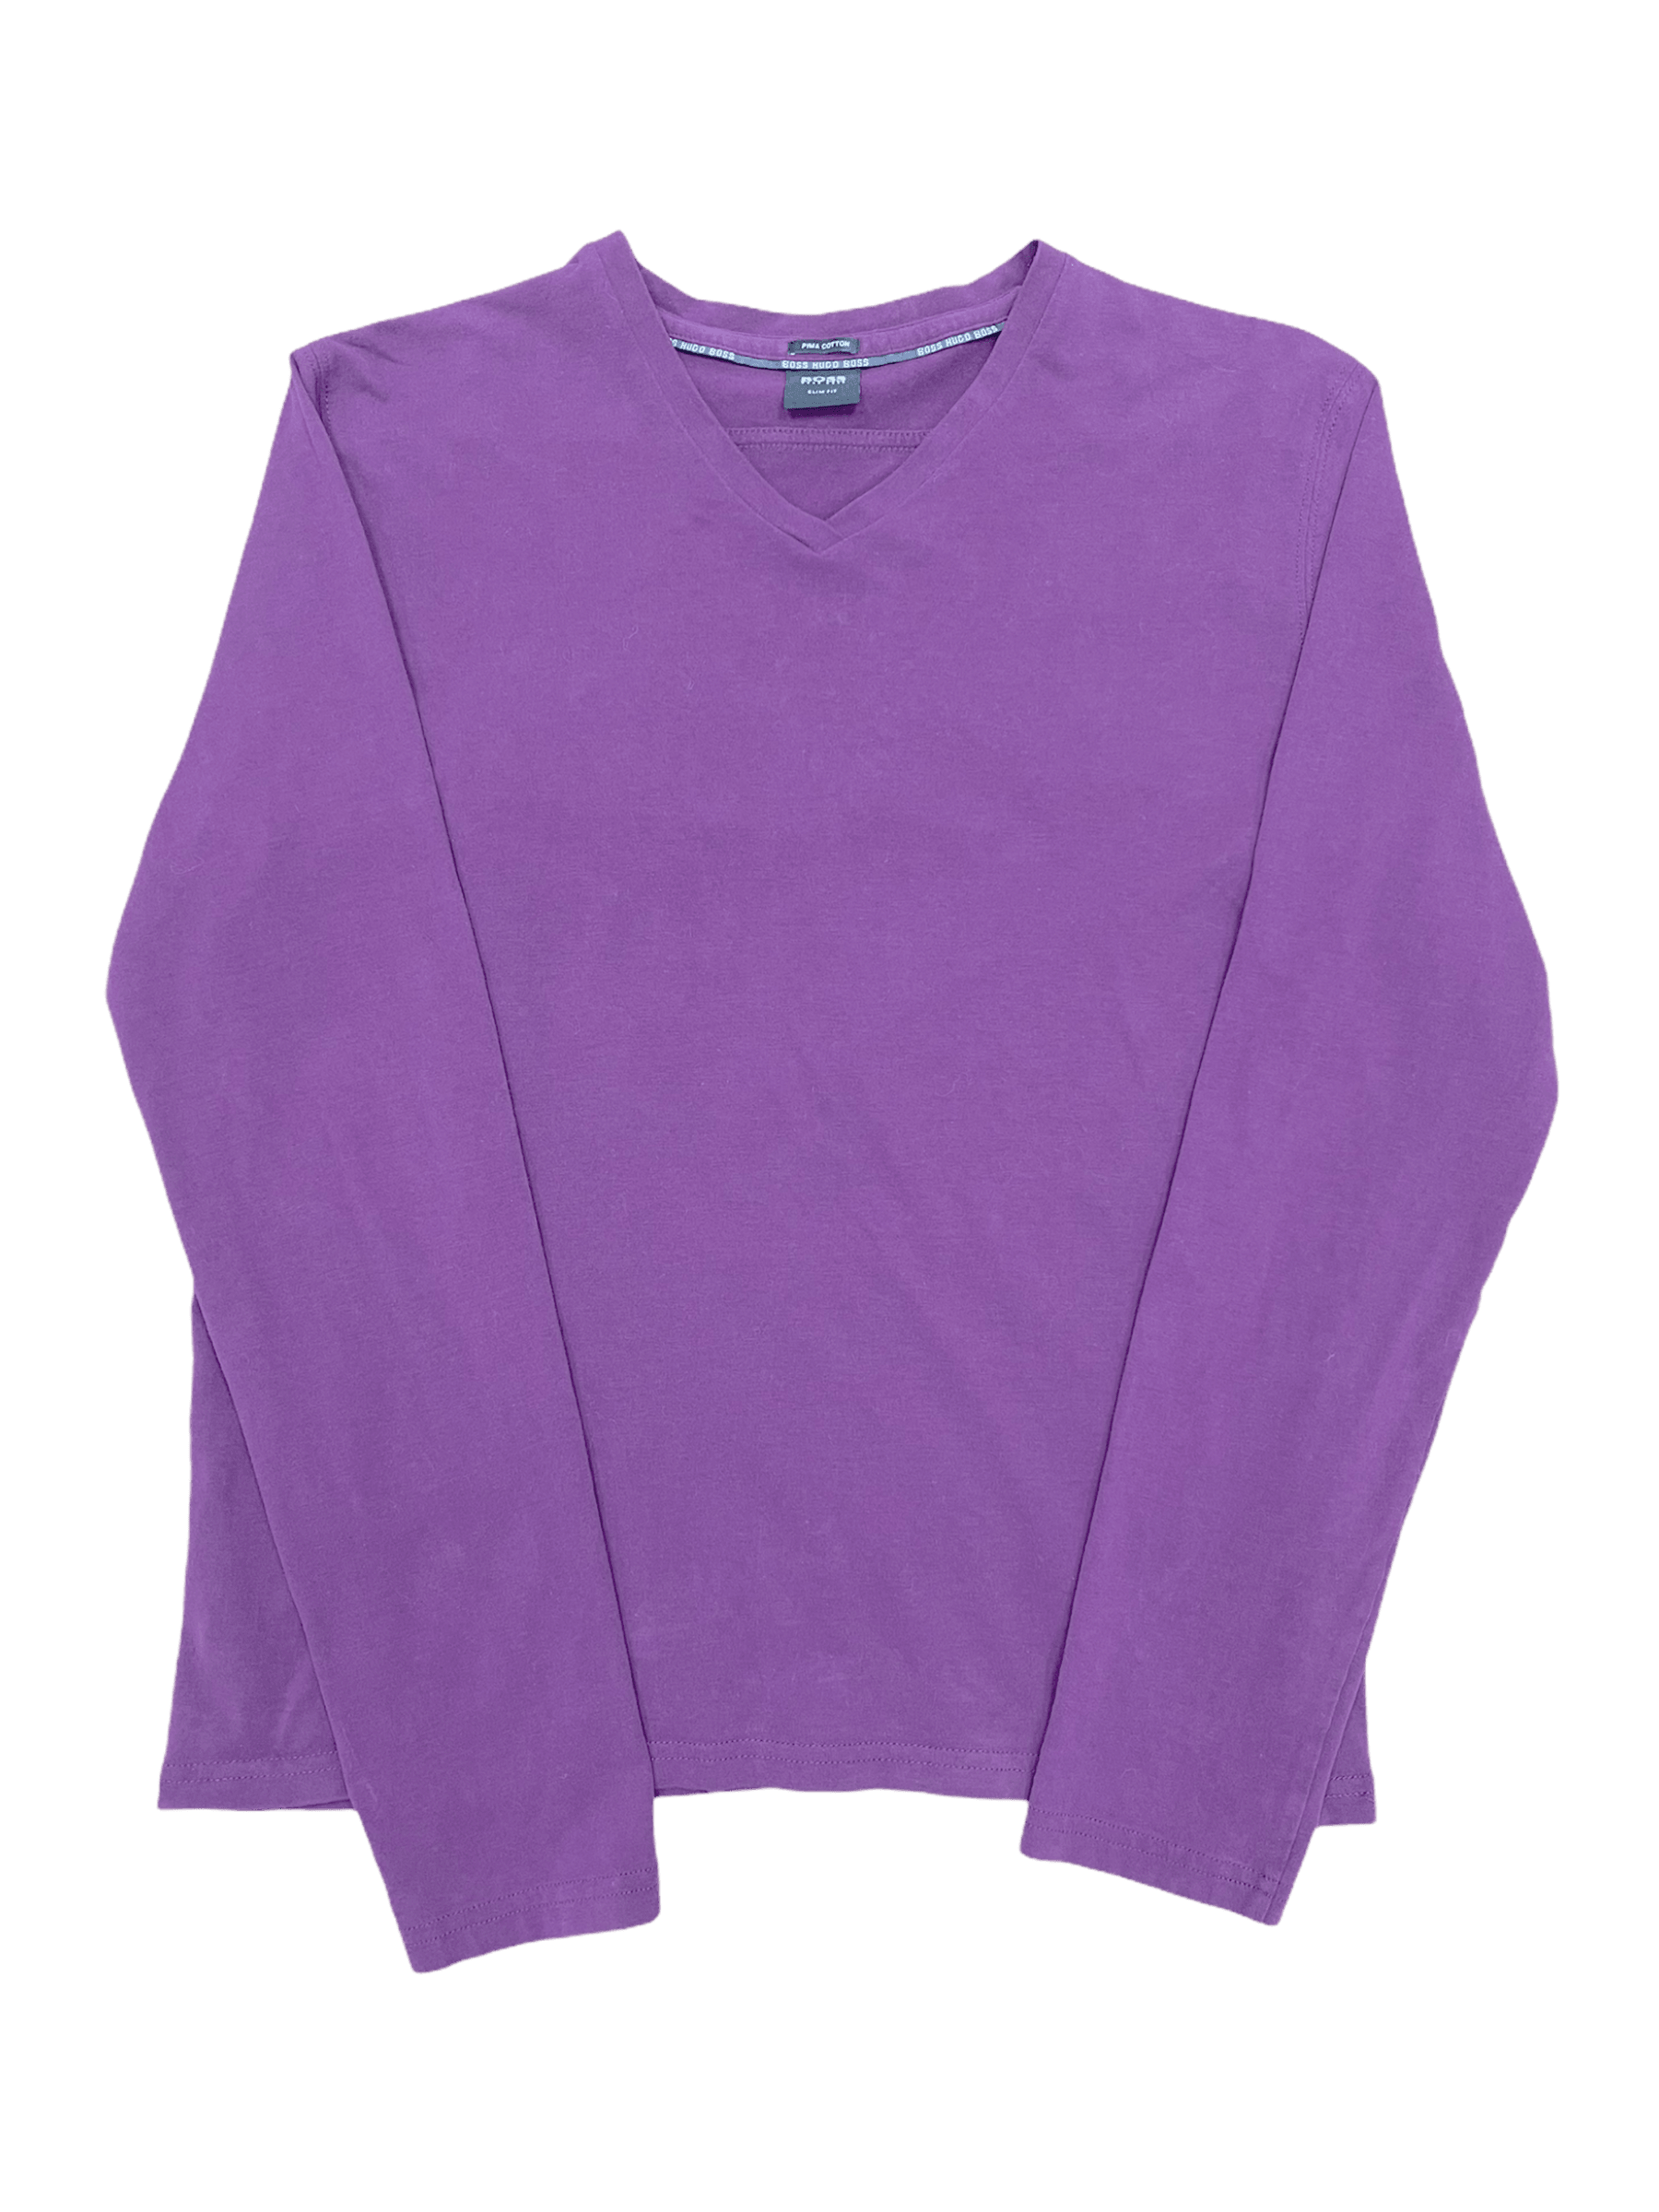 Hugo Boss Long Sleeve V Neck T Shirt, Purple, Medium—Genuine Design luxury consignment